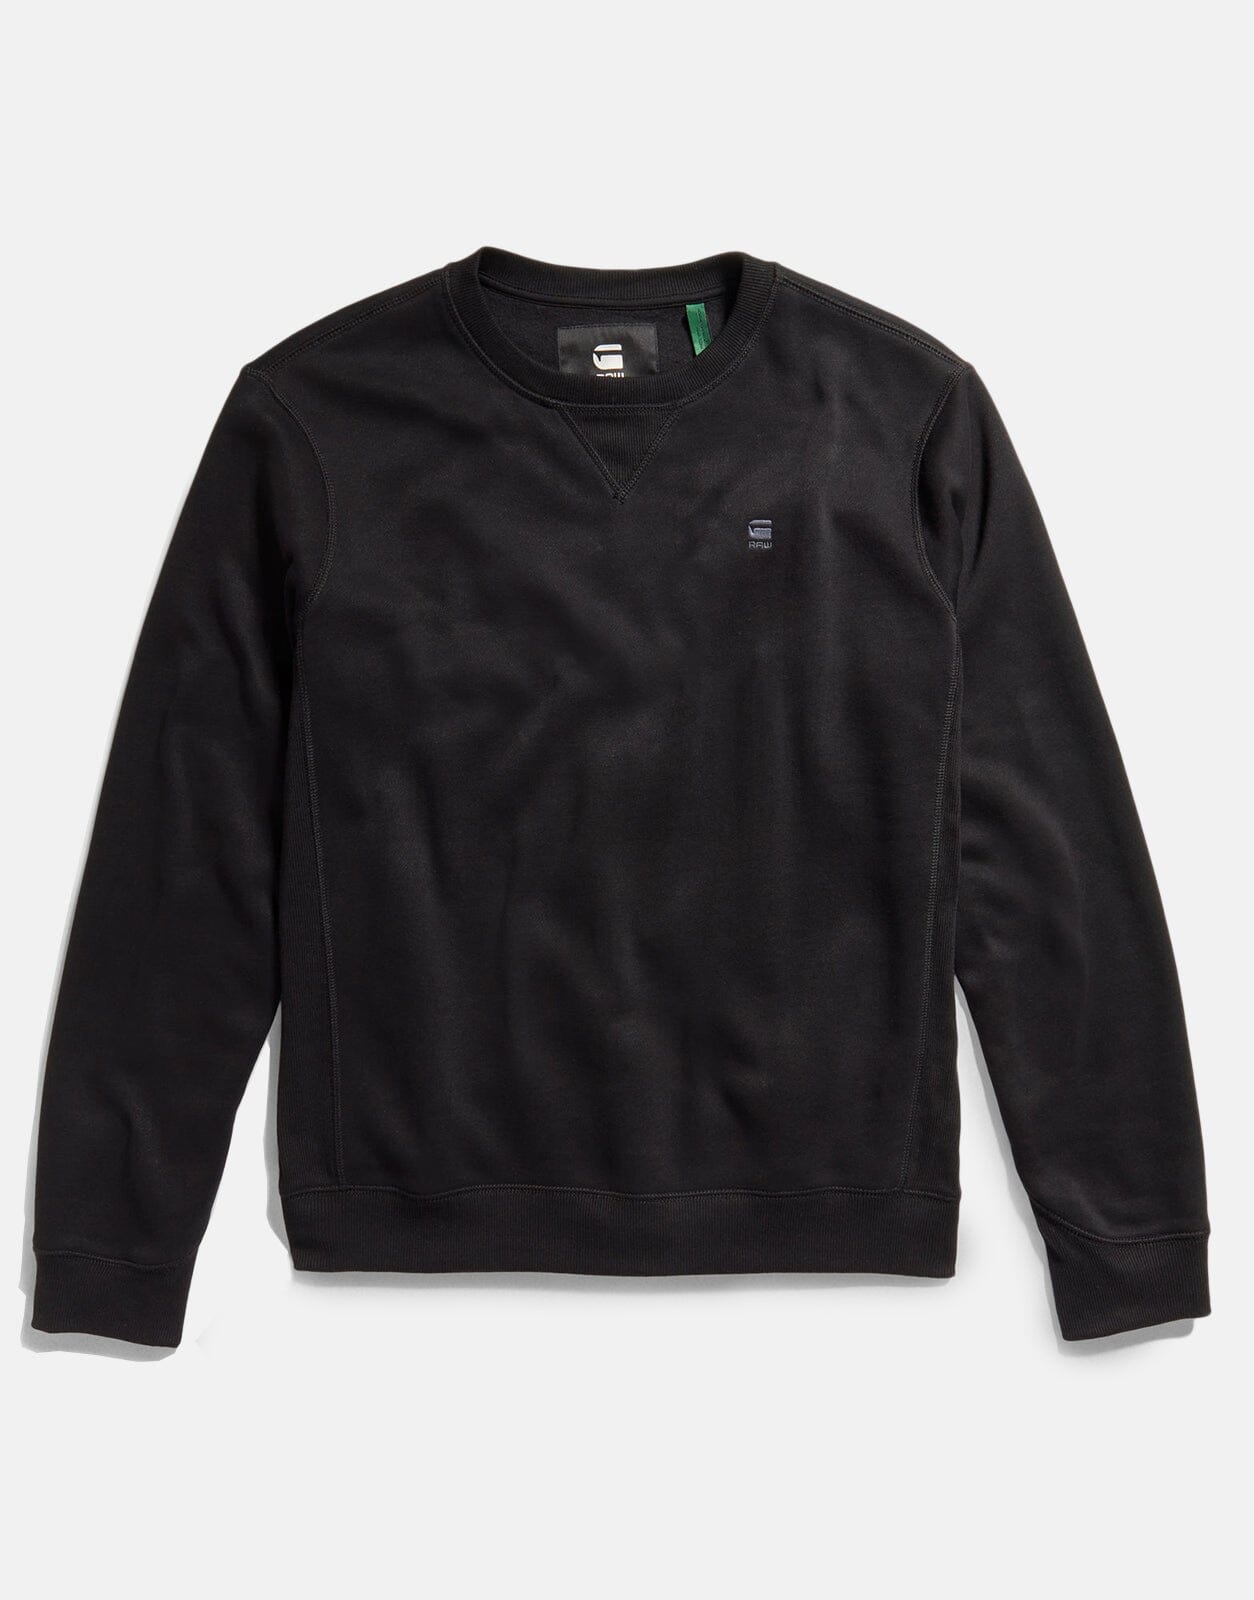 G-Star RAW Premium Core Dk Black Sweatshirt - Subwear